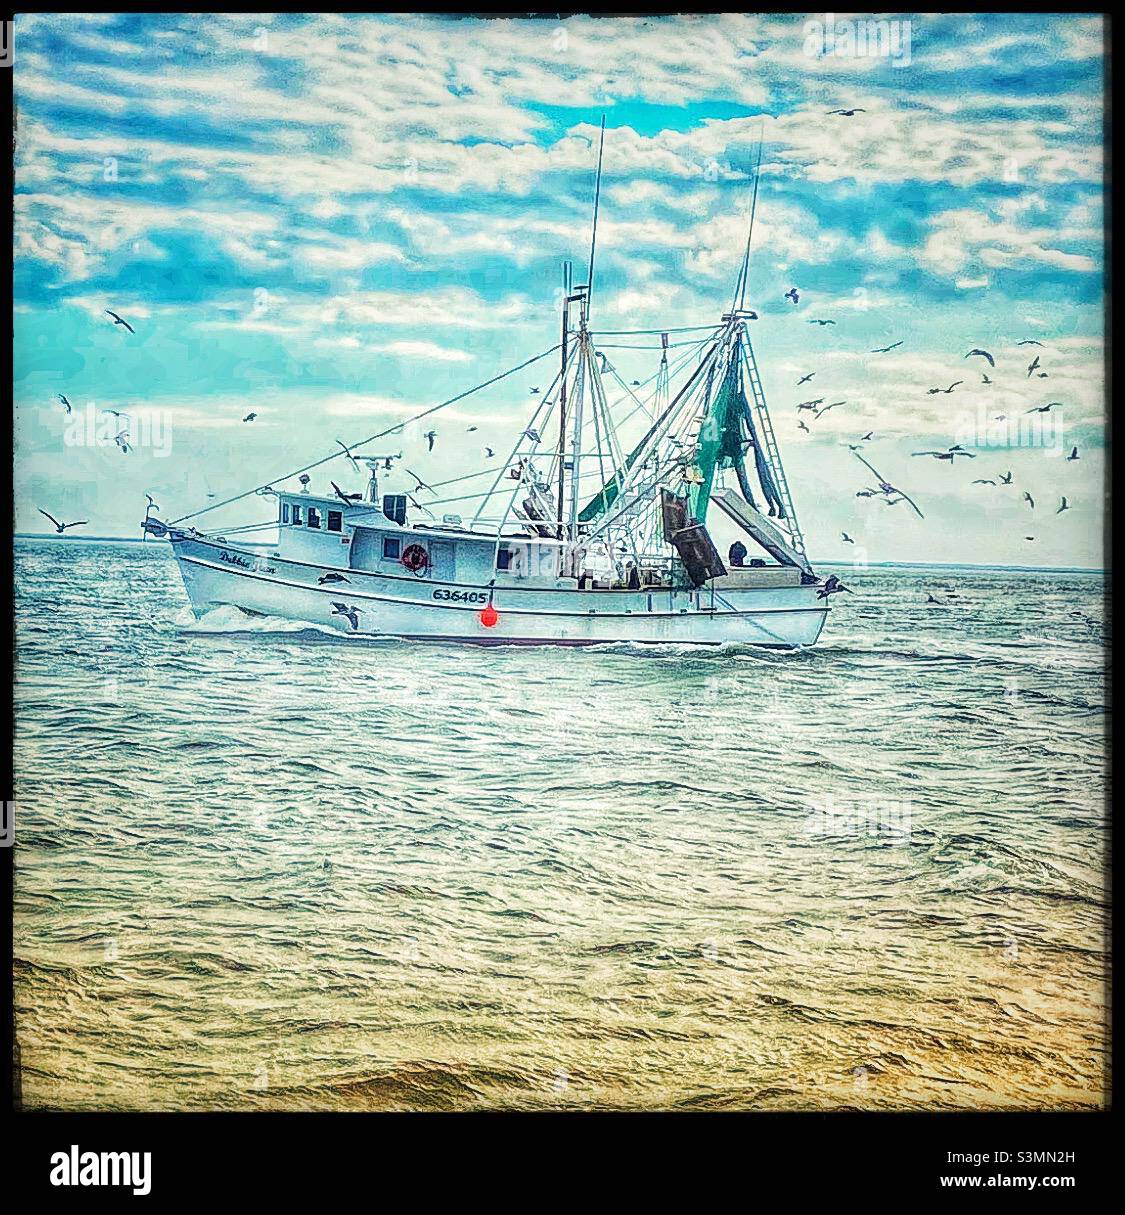 Fishing boat on the Atlantic ocean Stock Photo